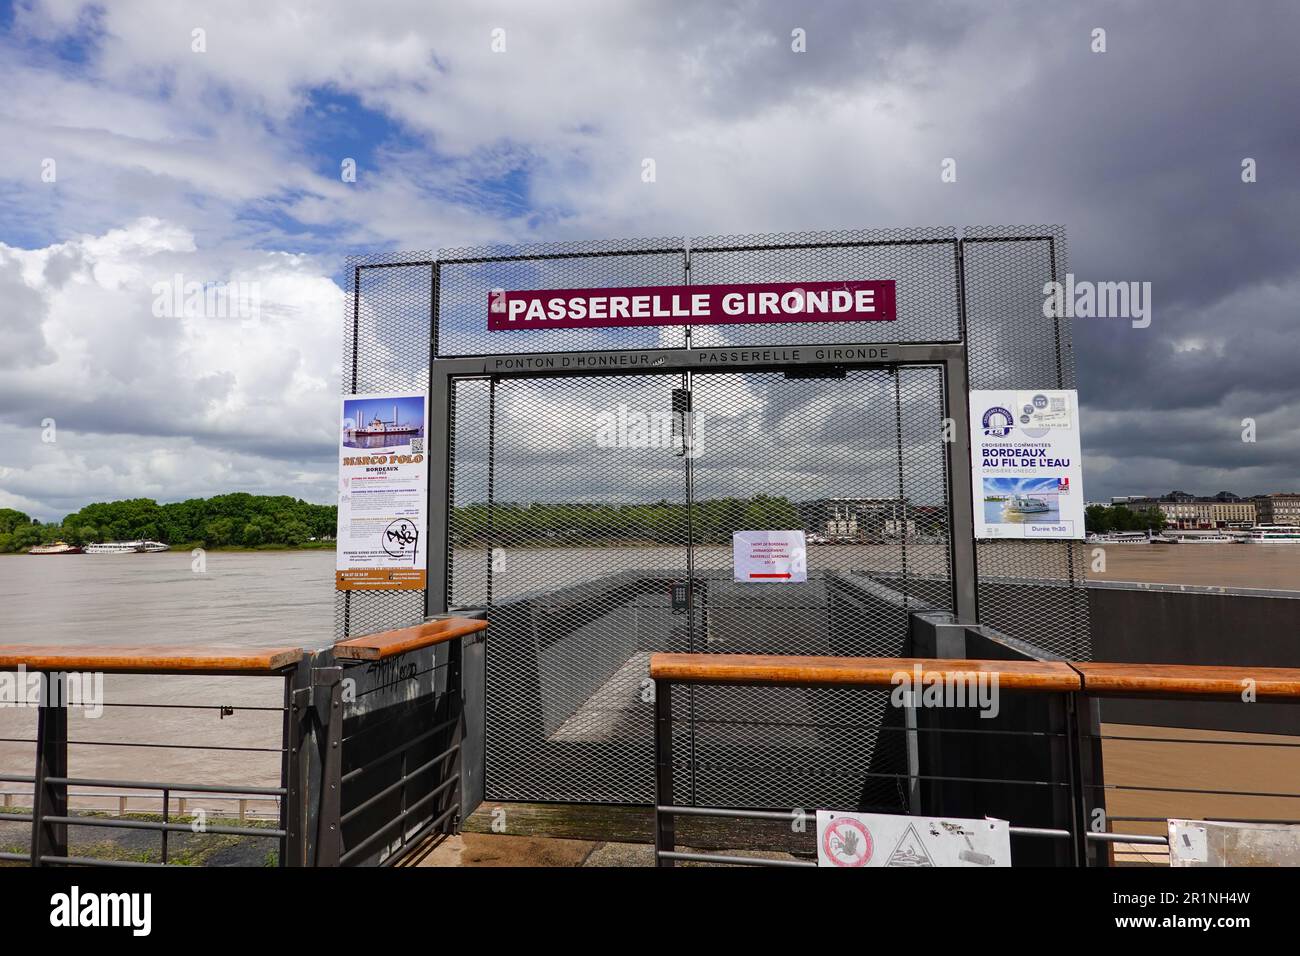 Passerelle Gironde, Garonne River, Bordeaux, France. Stock Photo